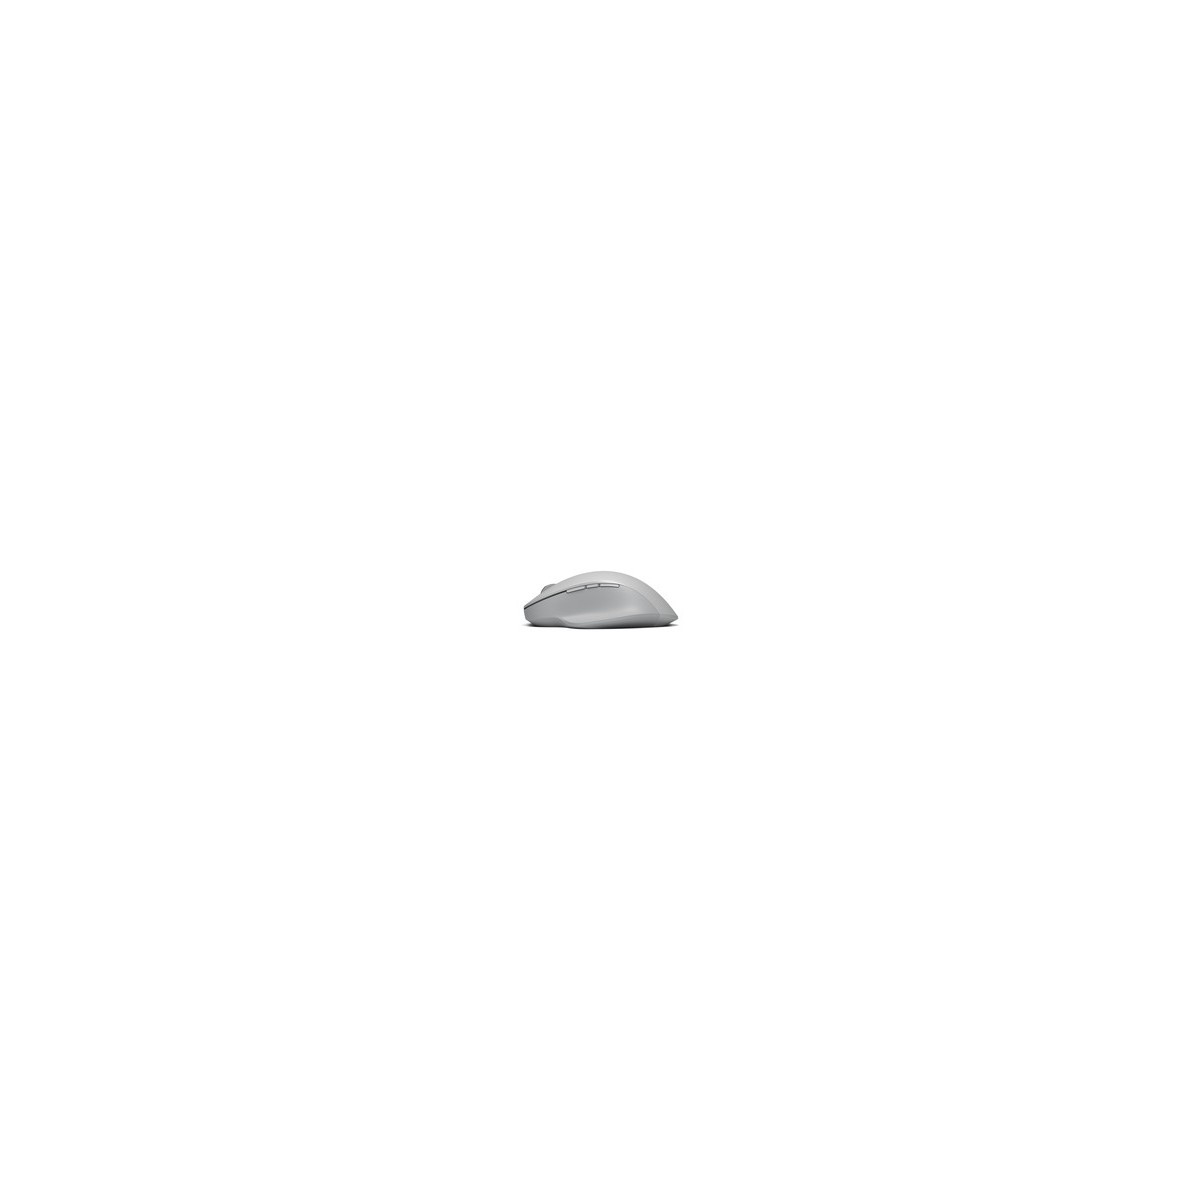 Microsoft Surface Precision Mouse - Mouse - 1,000 dpi Optical - 6 keys - Gray